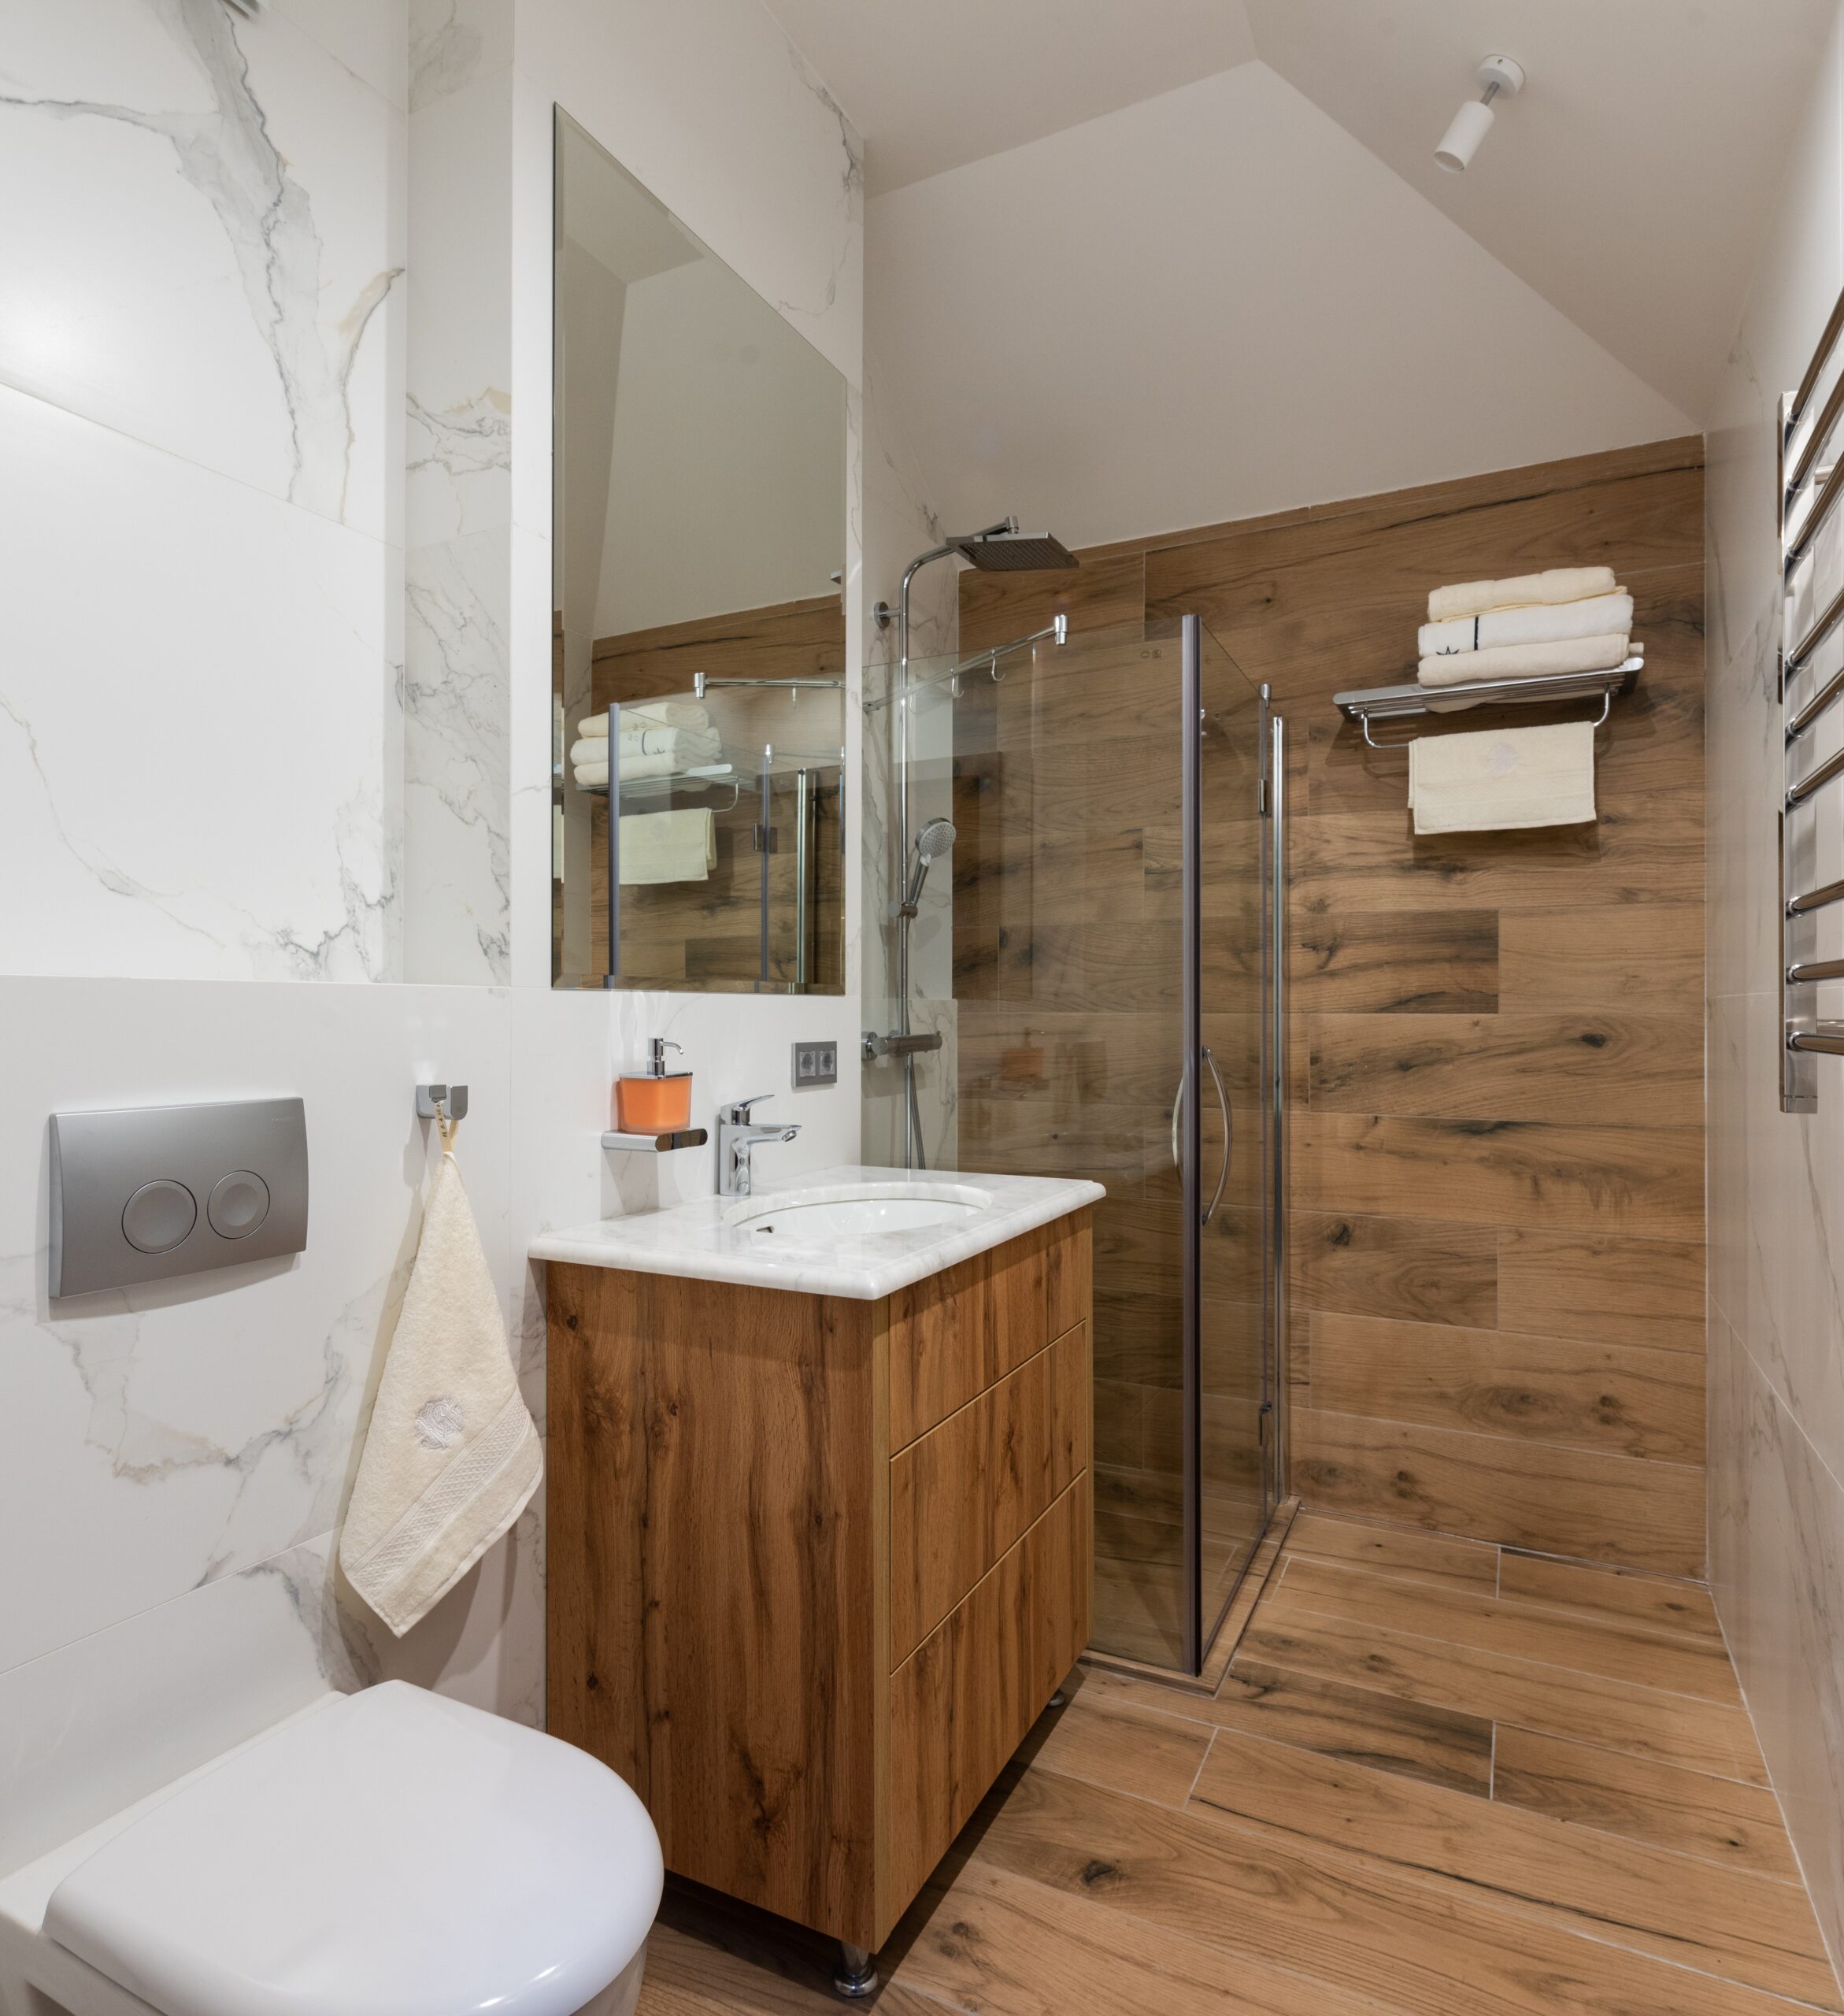 Top Trends in Bathroom Interior Design and Décor